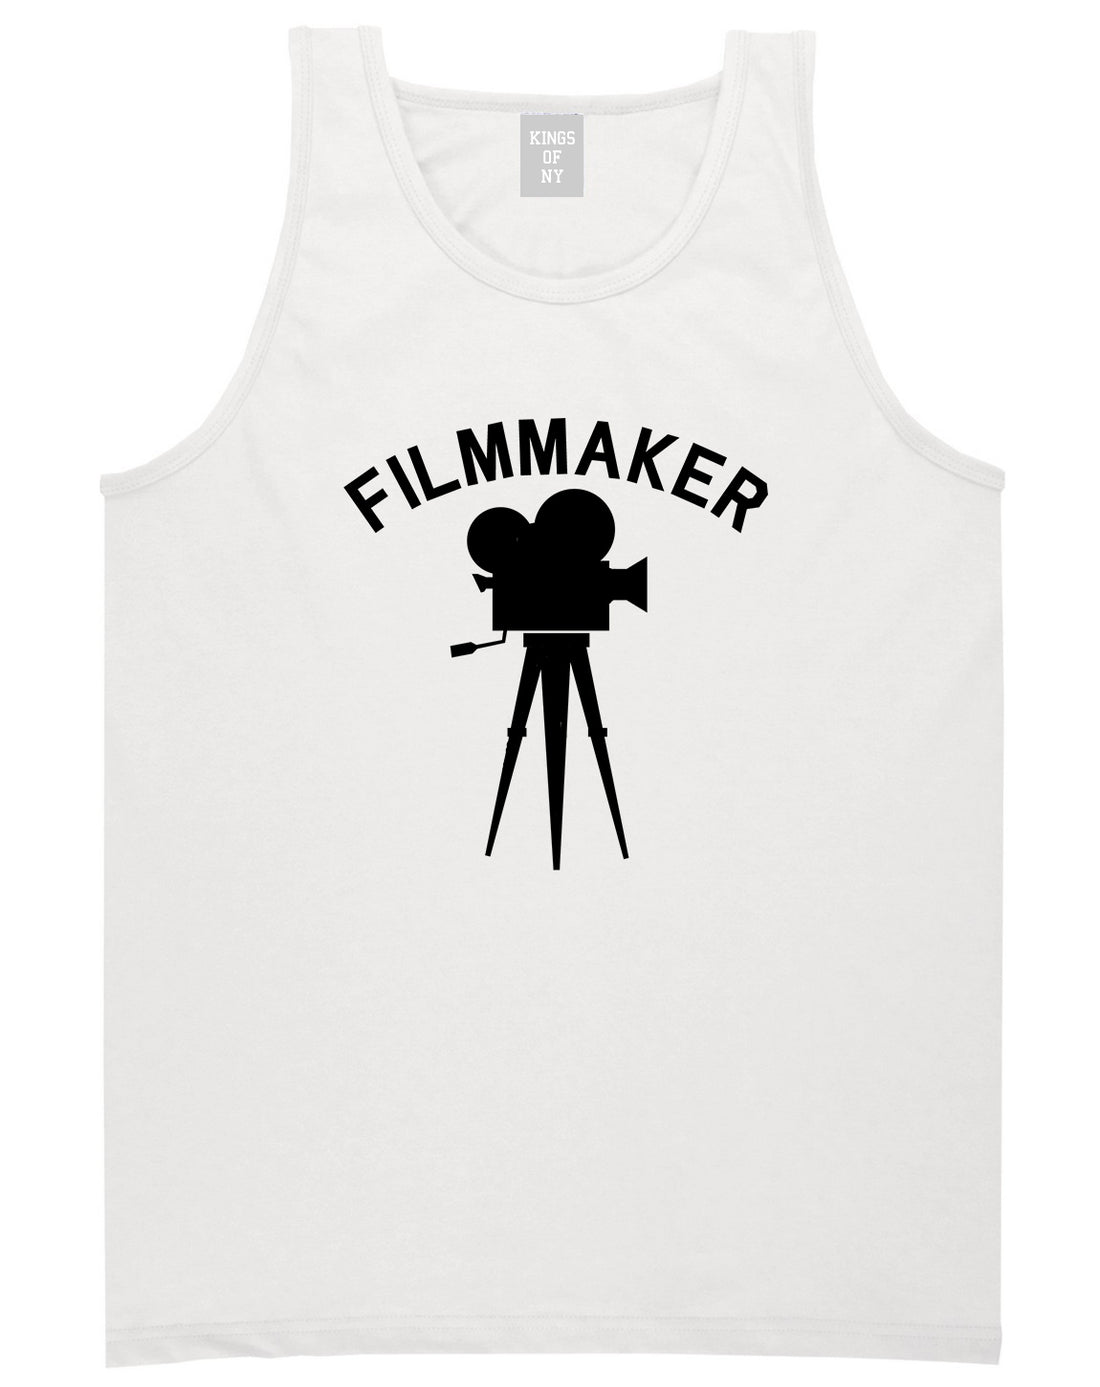 Filmmaker Camera Mens White Tank Top Shirt by KINGS OF NY